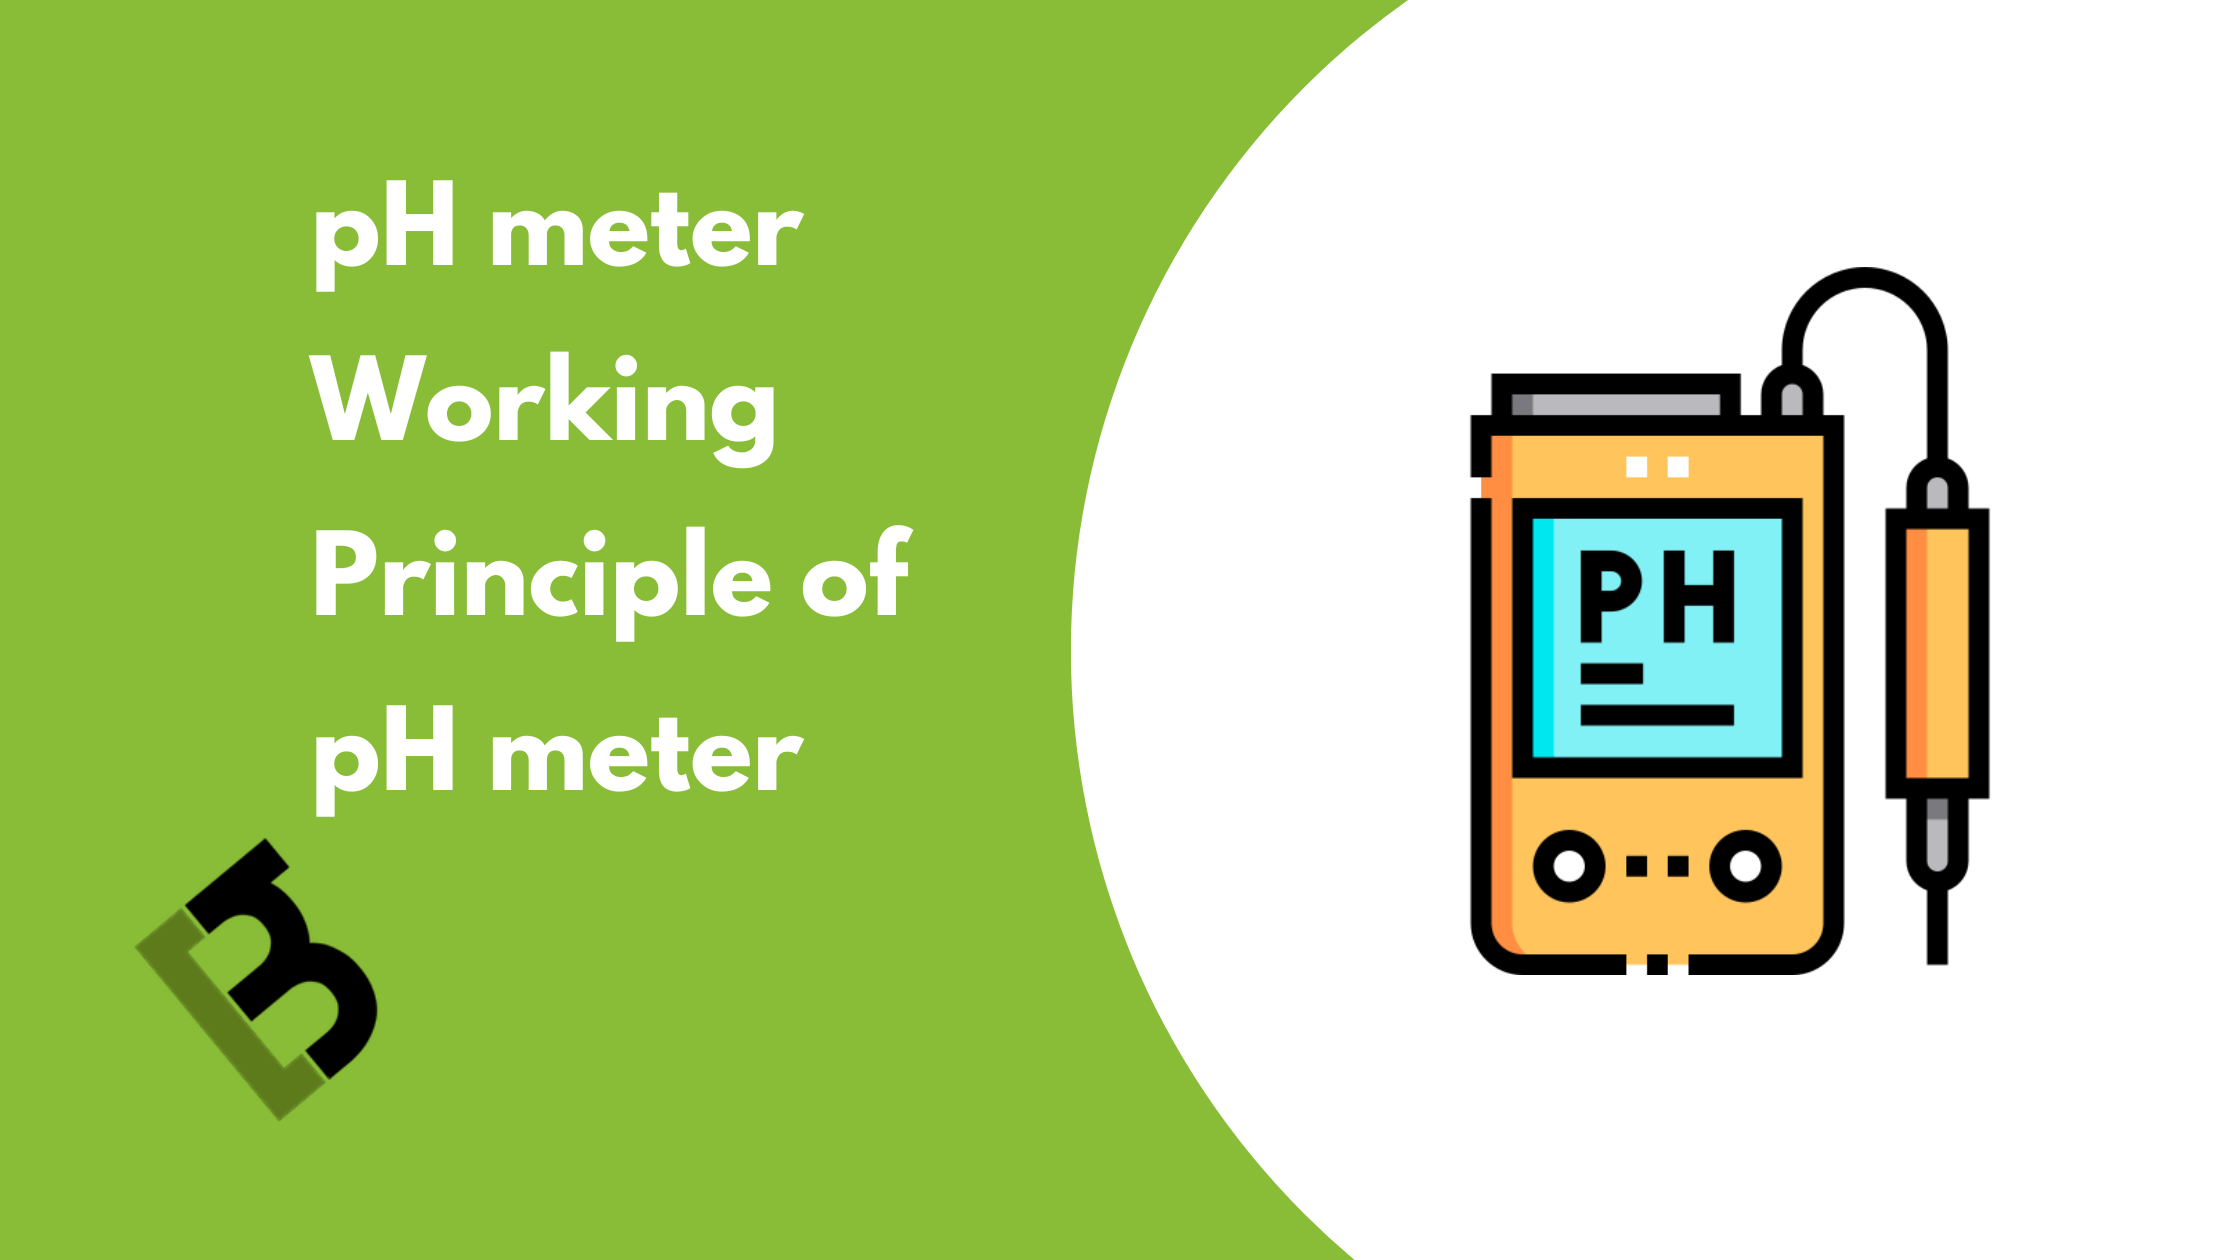 pH meter Working Principle of pH meter